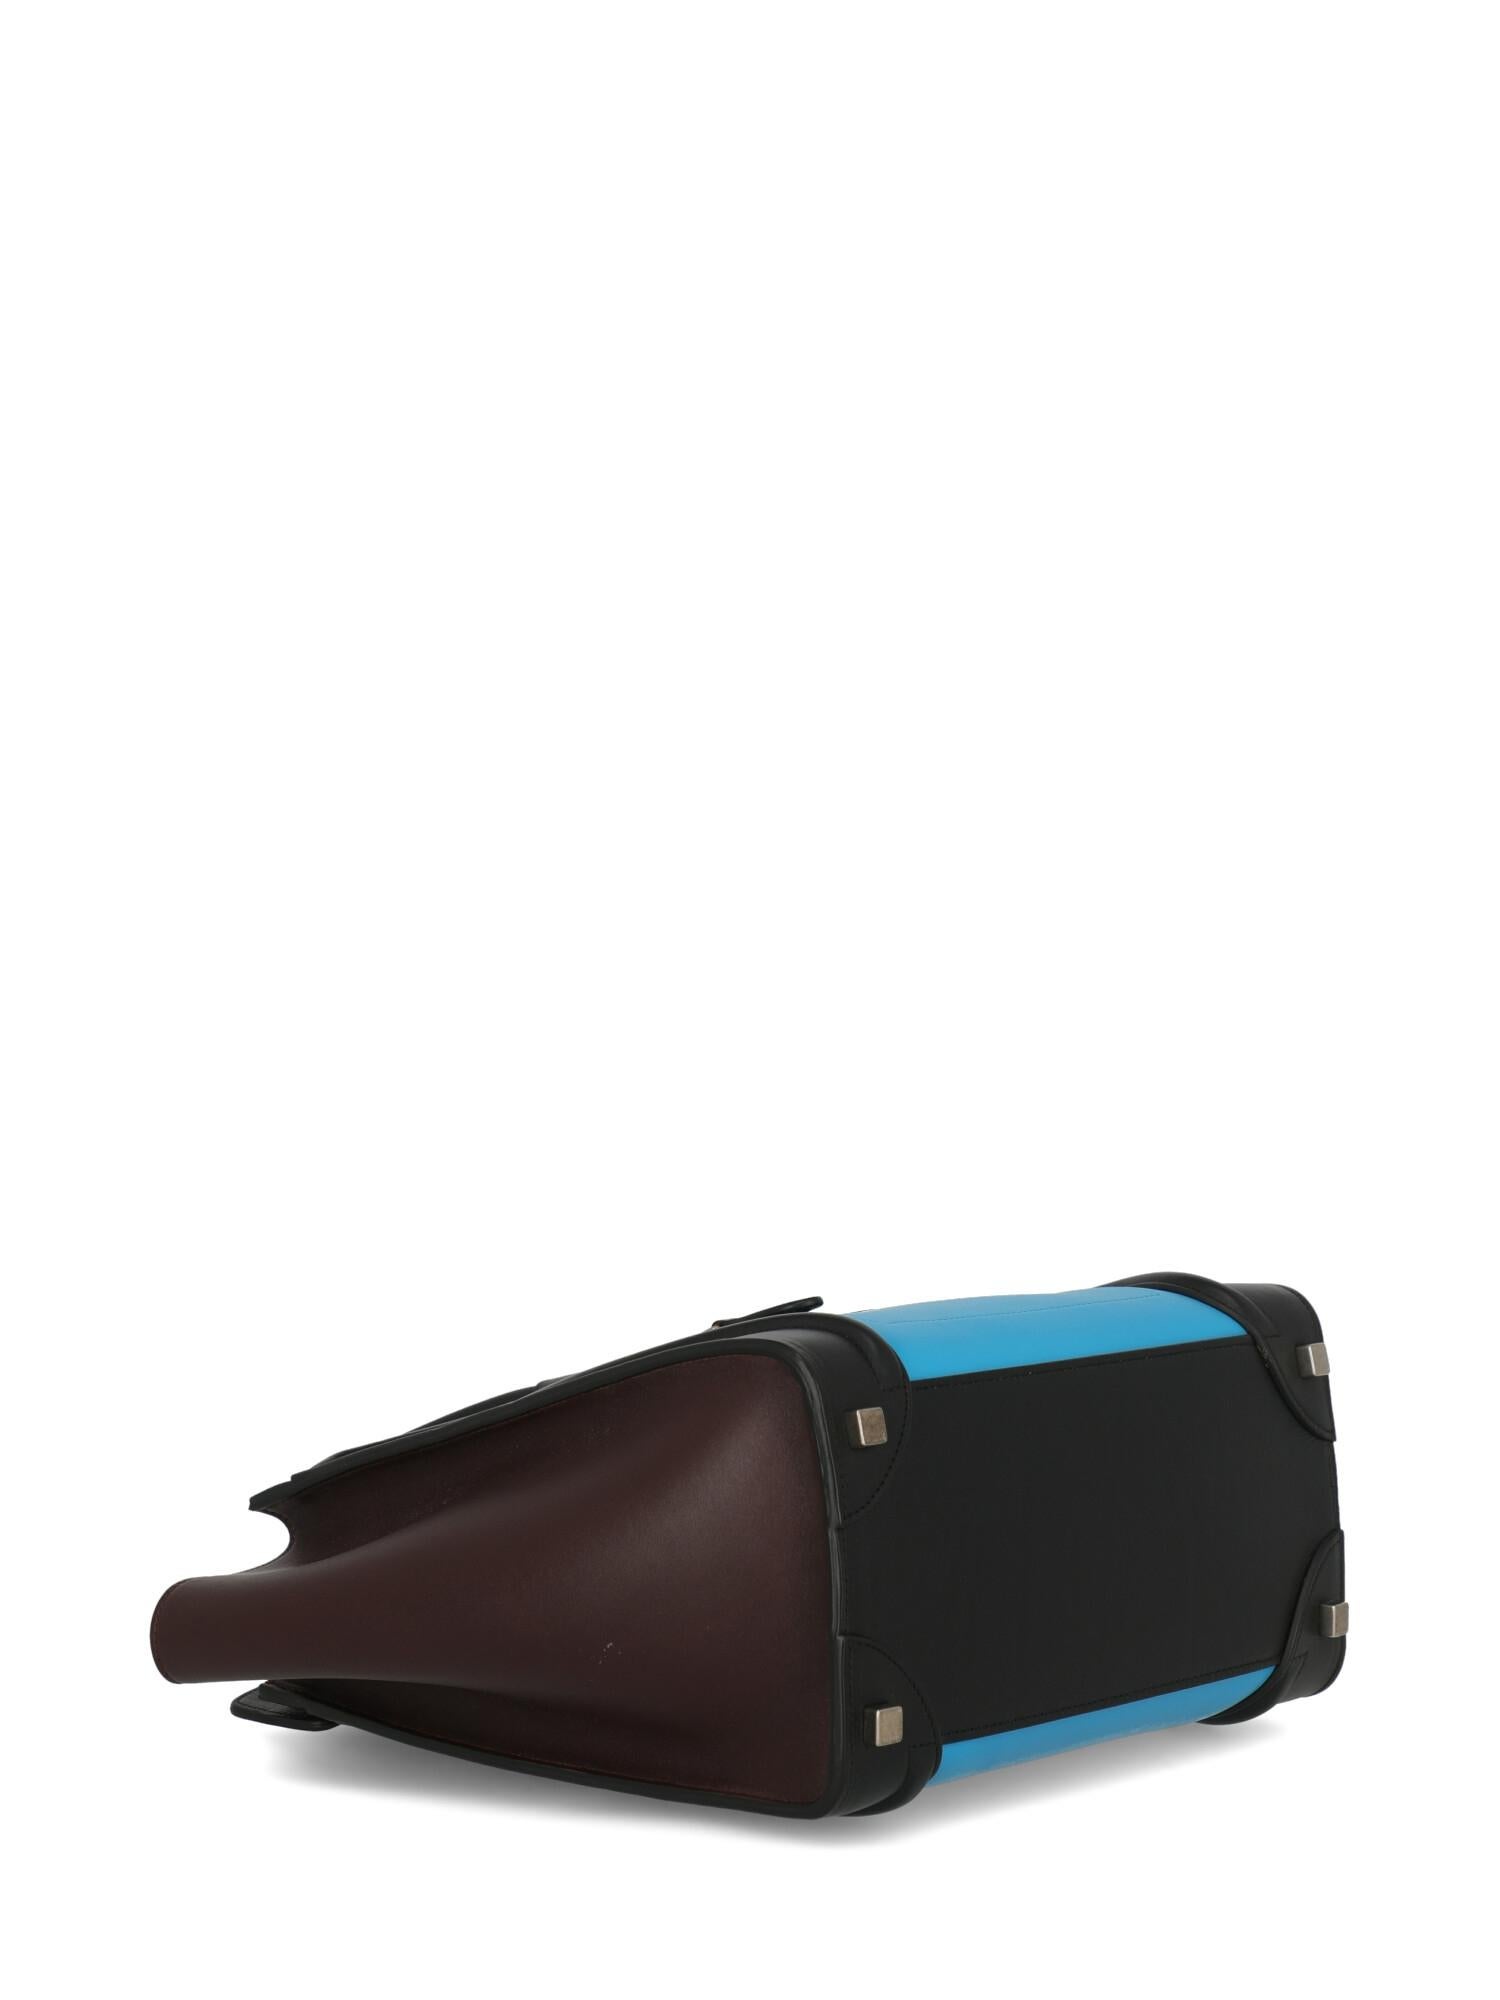 Celine Women's Handbag Luggage Black/Blue/Burgundy Leather For Sale 2